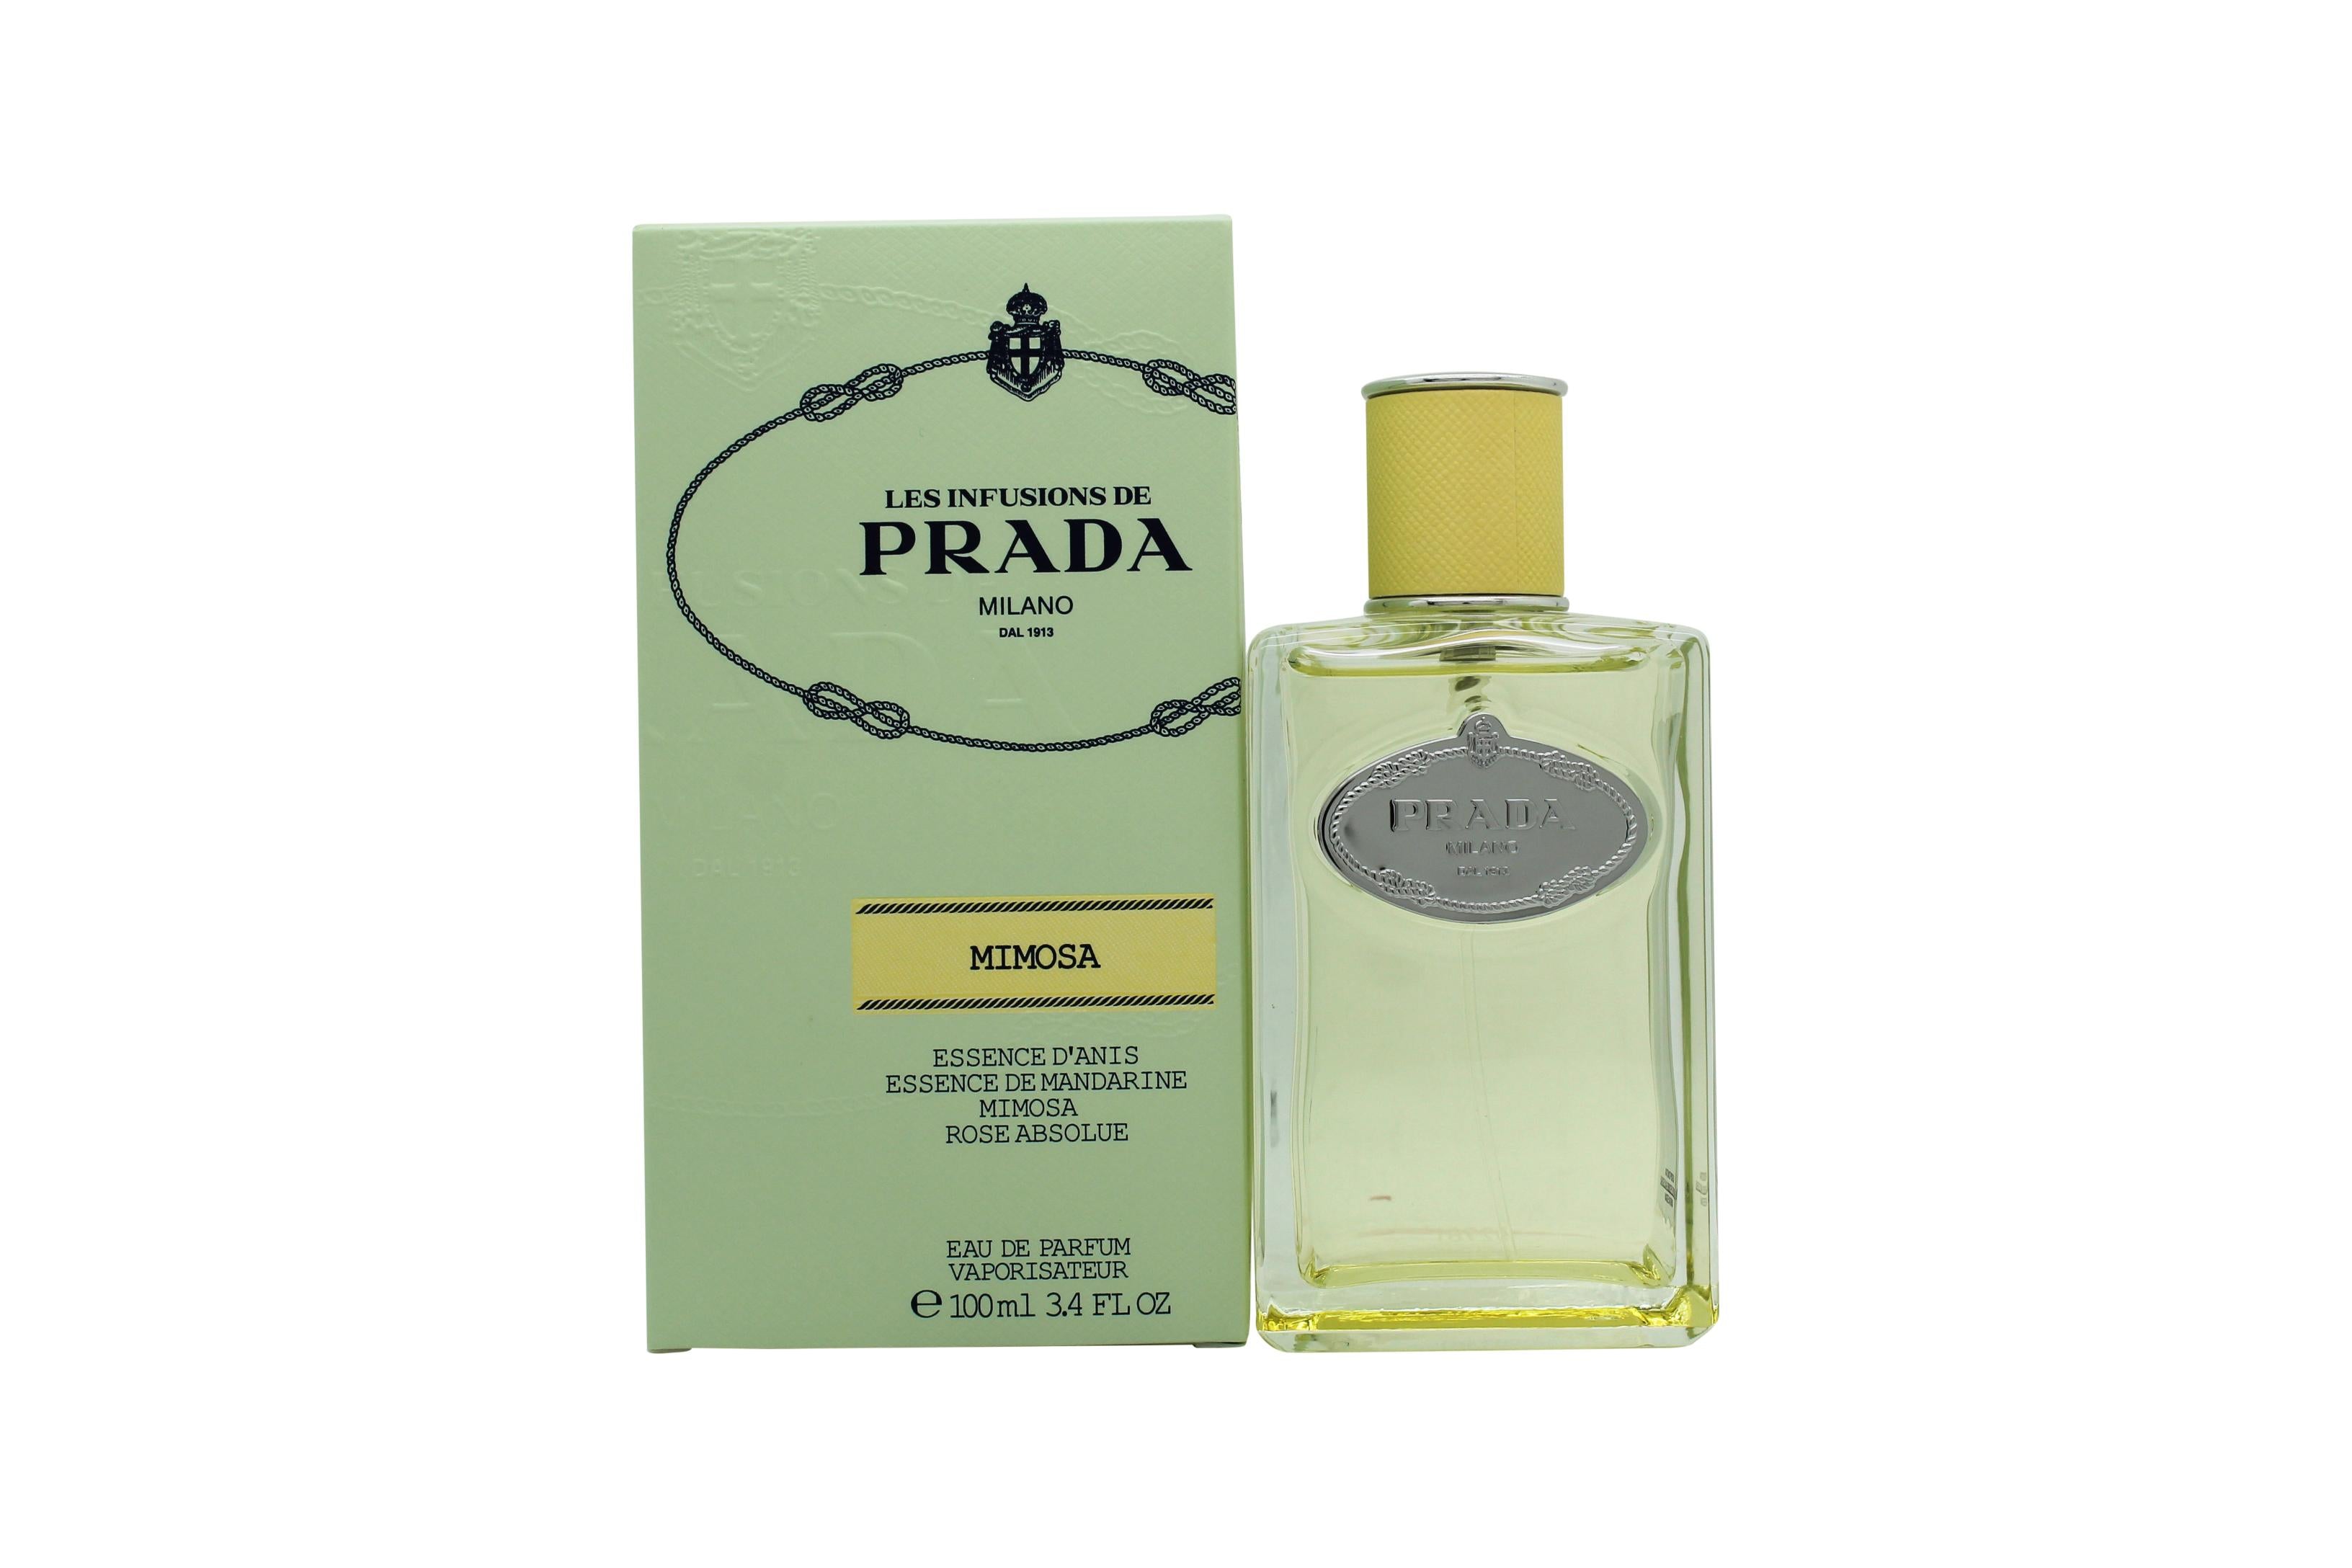 View Prada Les Infusions de Prada Mimosa Eau de Parfum 100ml Spray information